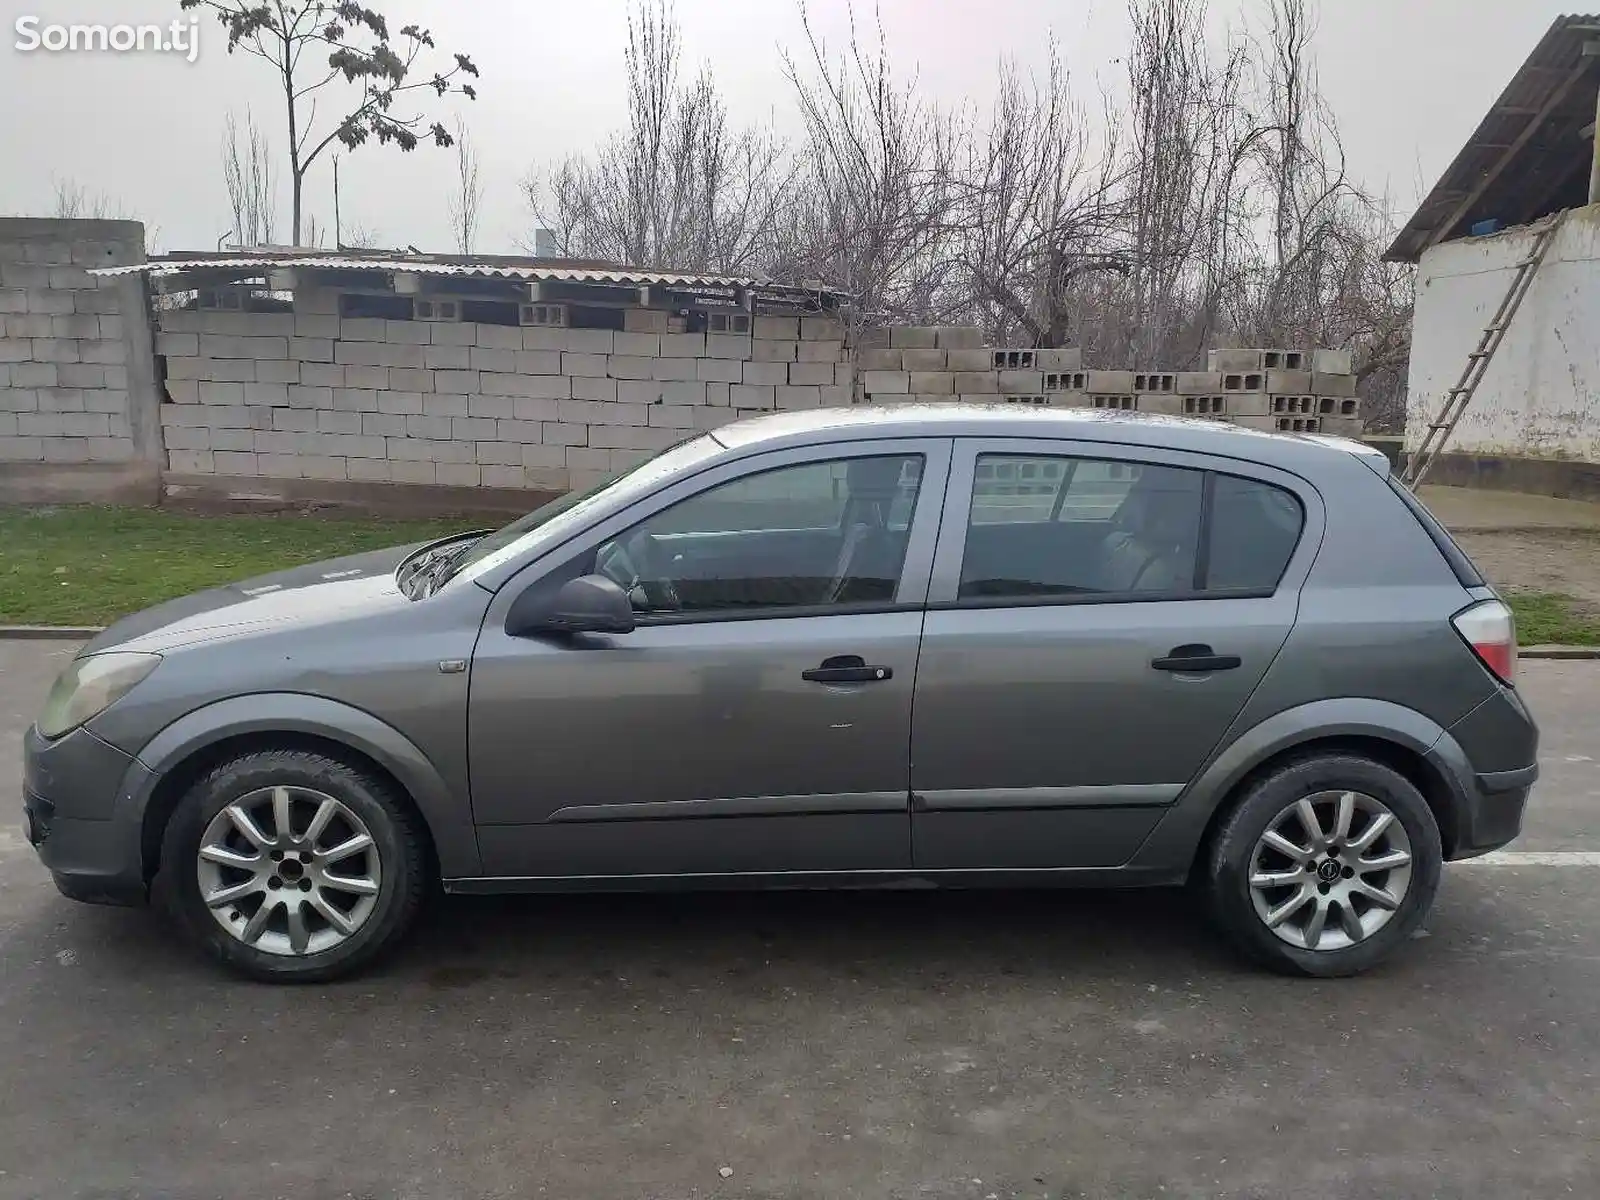 Opel Astra H, 2005-2